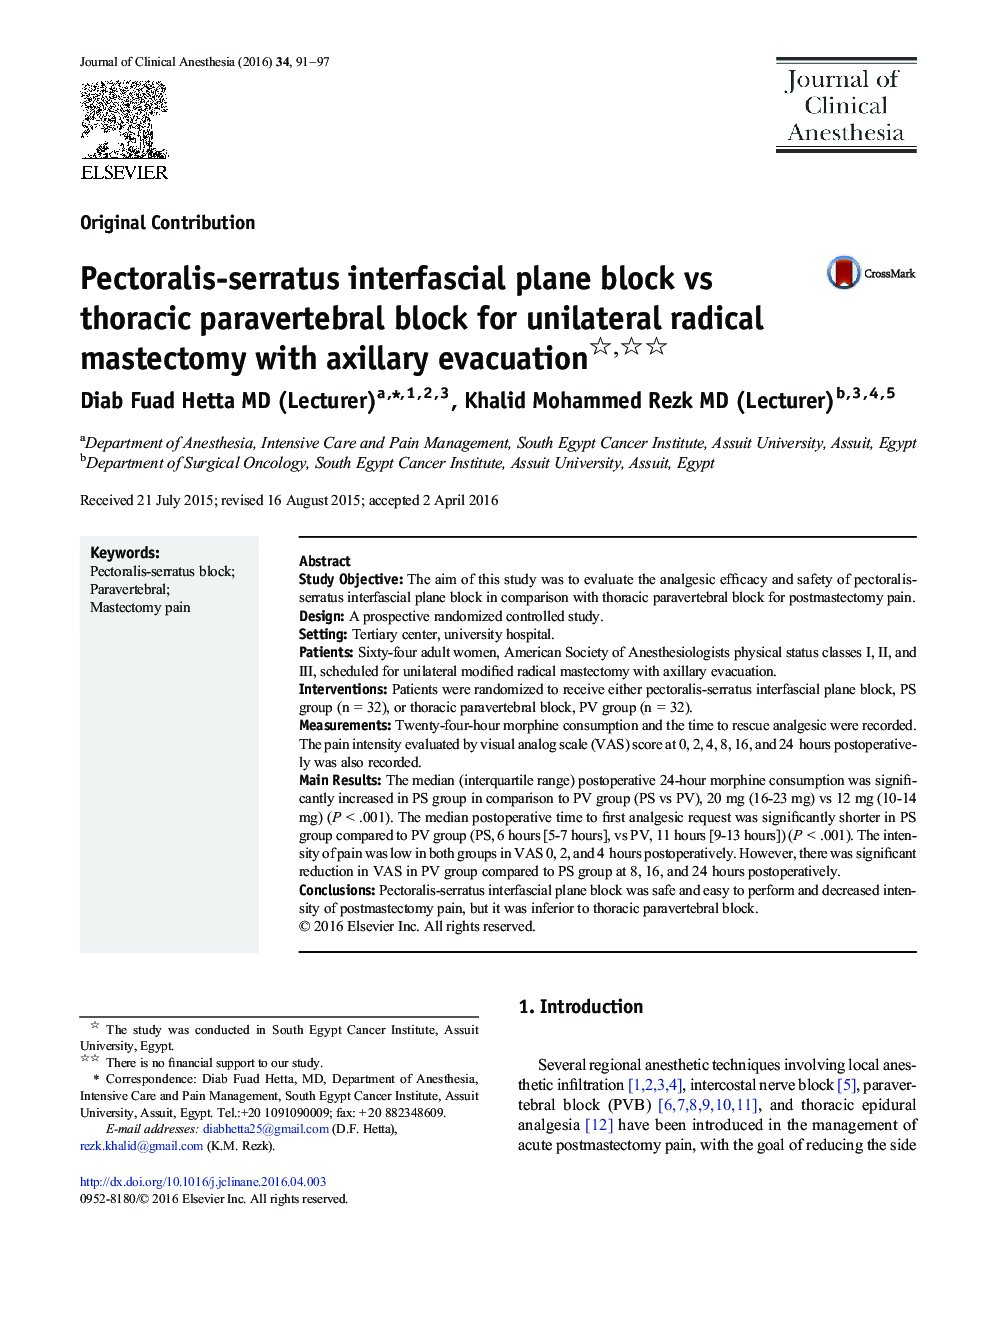 Original ContributionPectoralis-serratus interfascial plane block vs thoracic paravertebral block for unilateral radical mastectomy with axillary evacuation